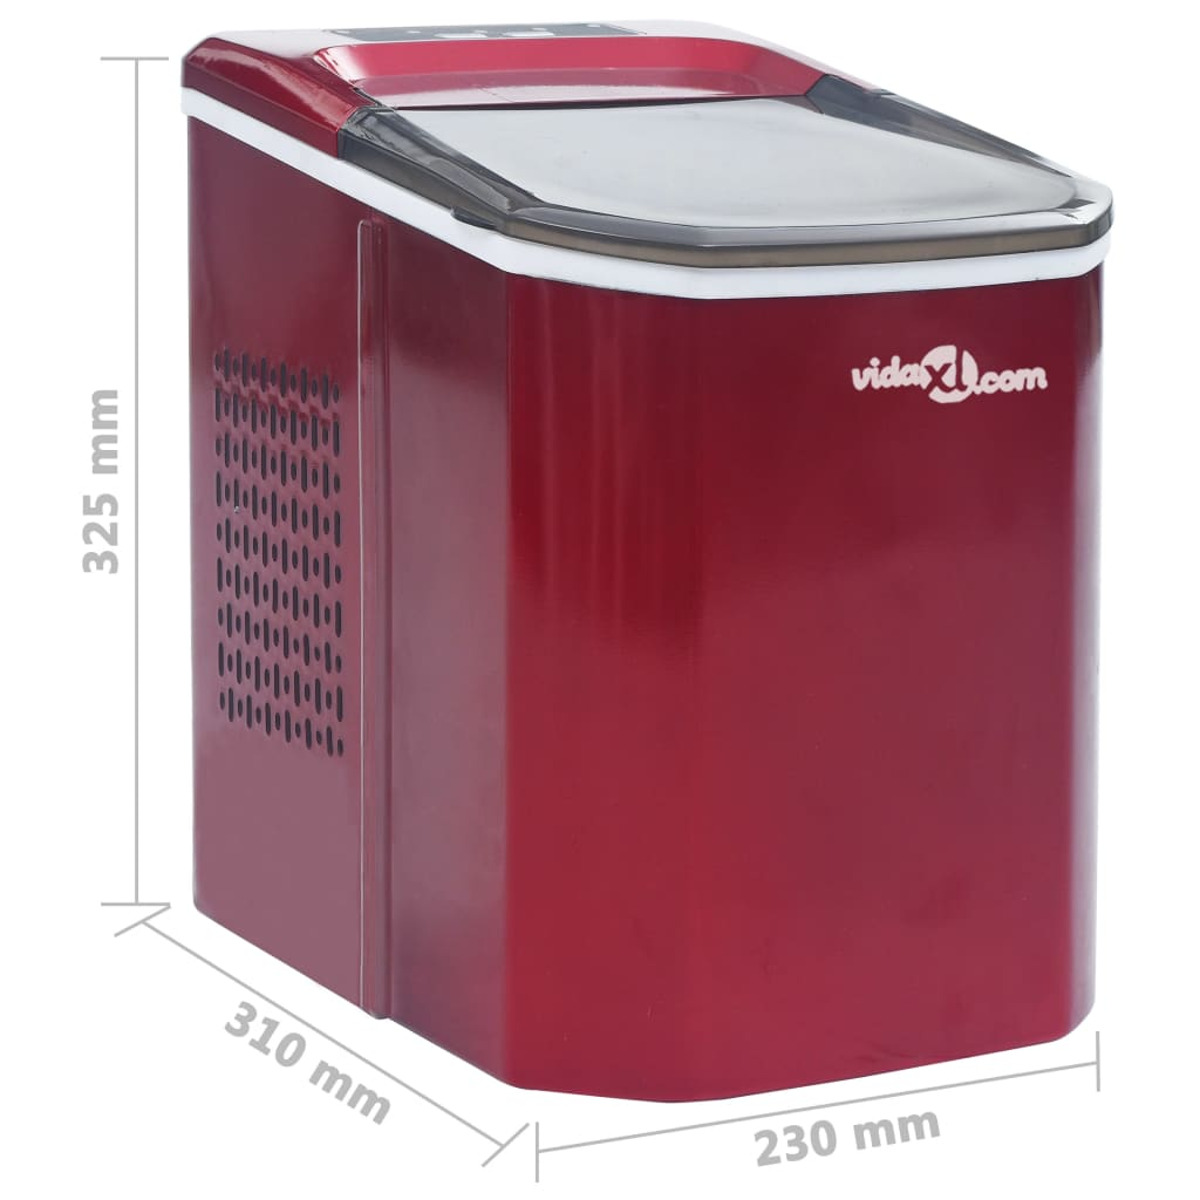 VIDAXL 51099 Watt, Rot) Eiswürfelmaschine (112